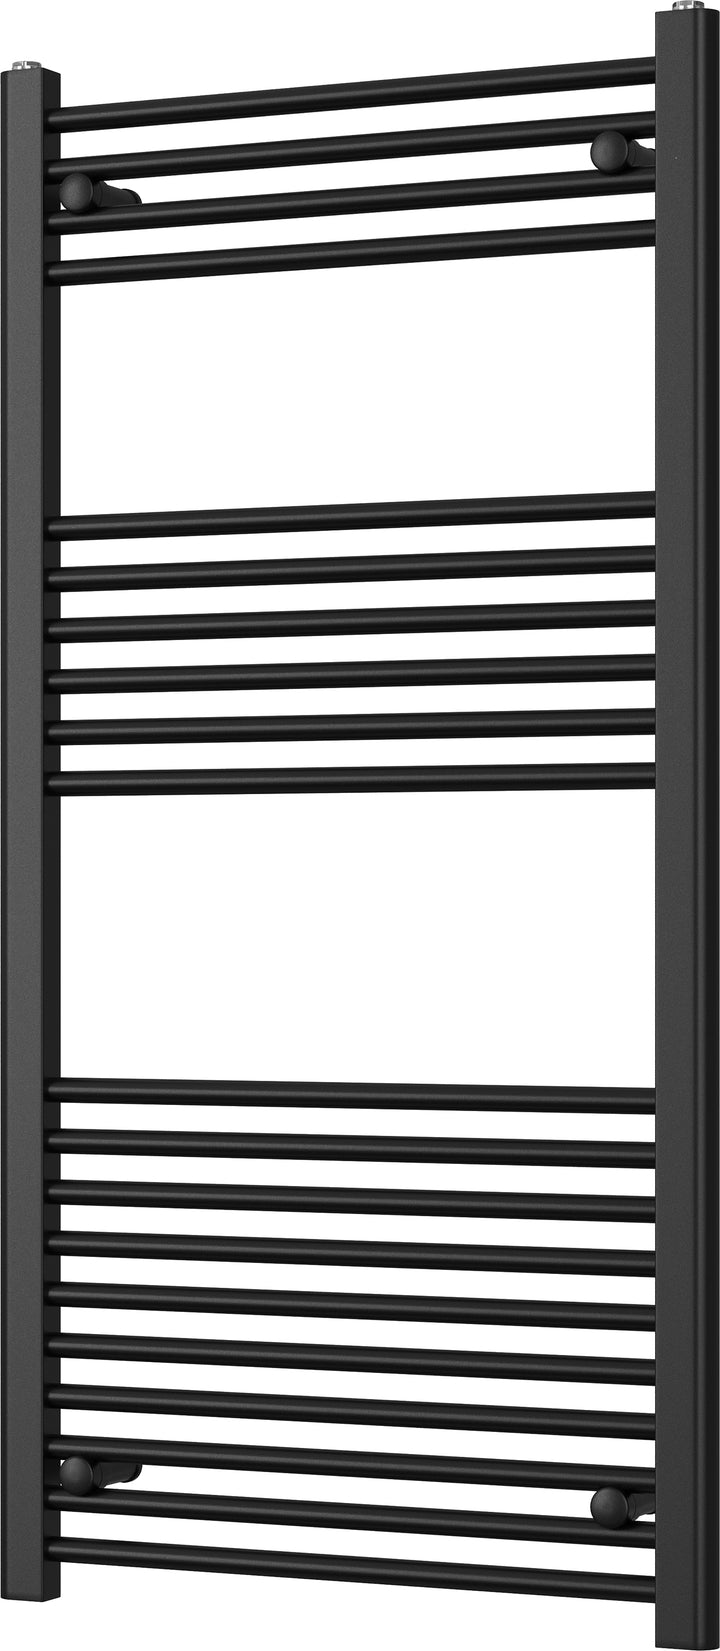 Zennor - Black Heated Towel Rail - H1200mm x W600mm - Straight